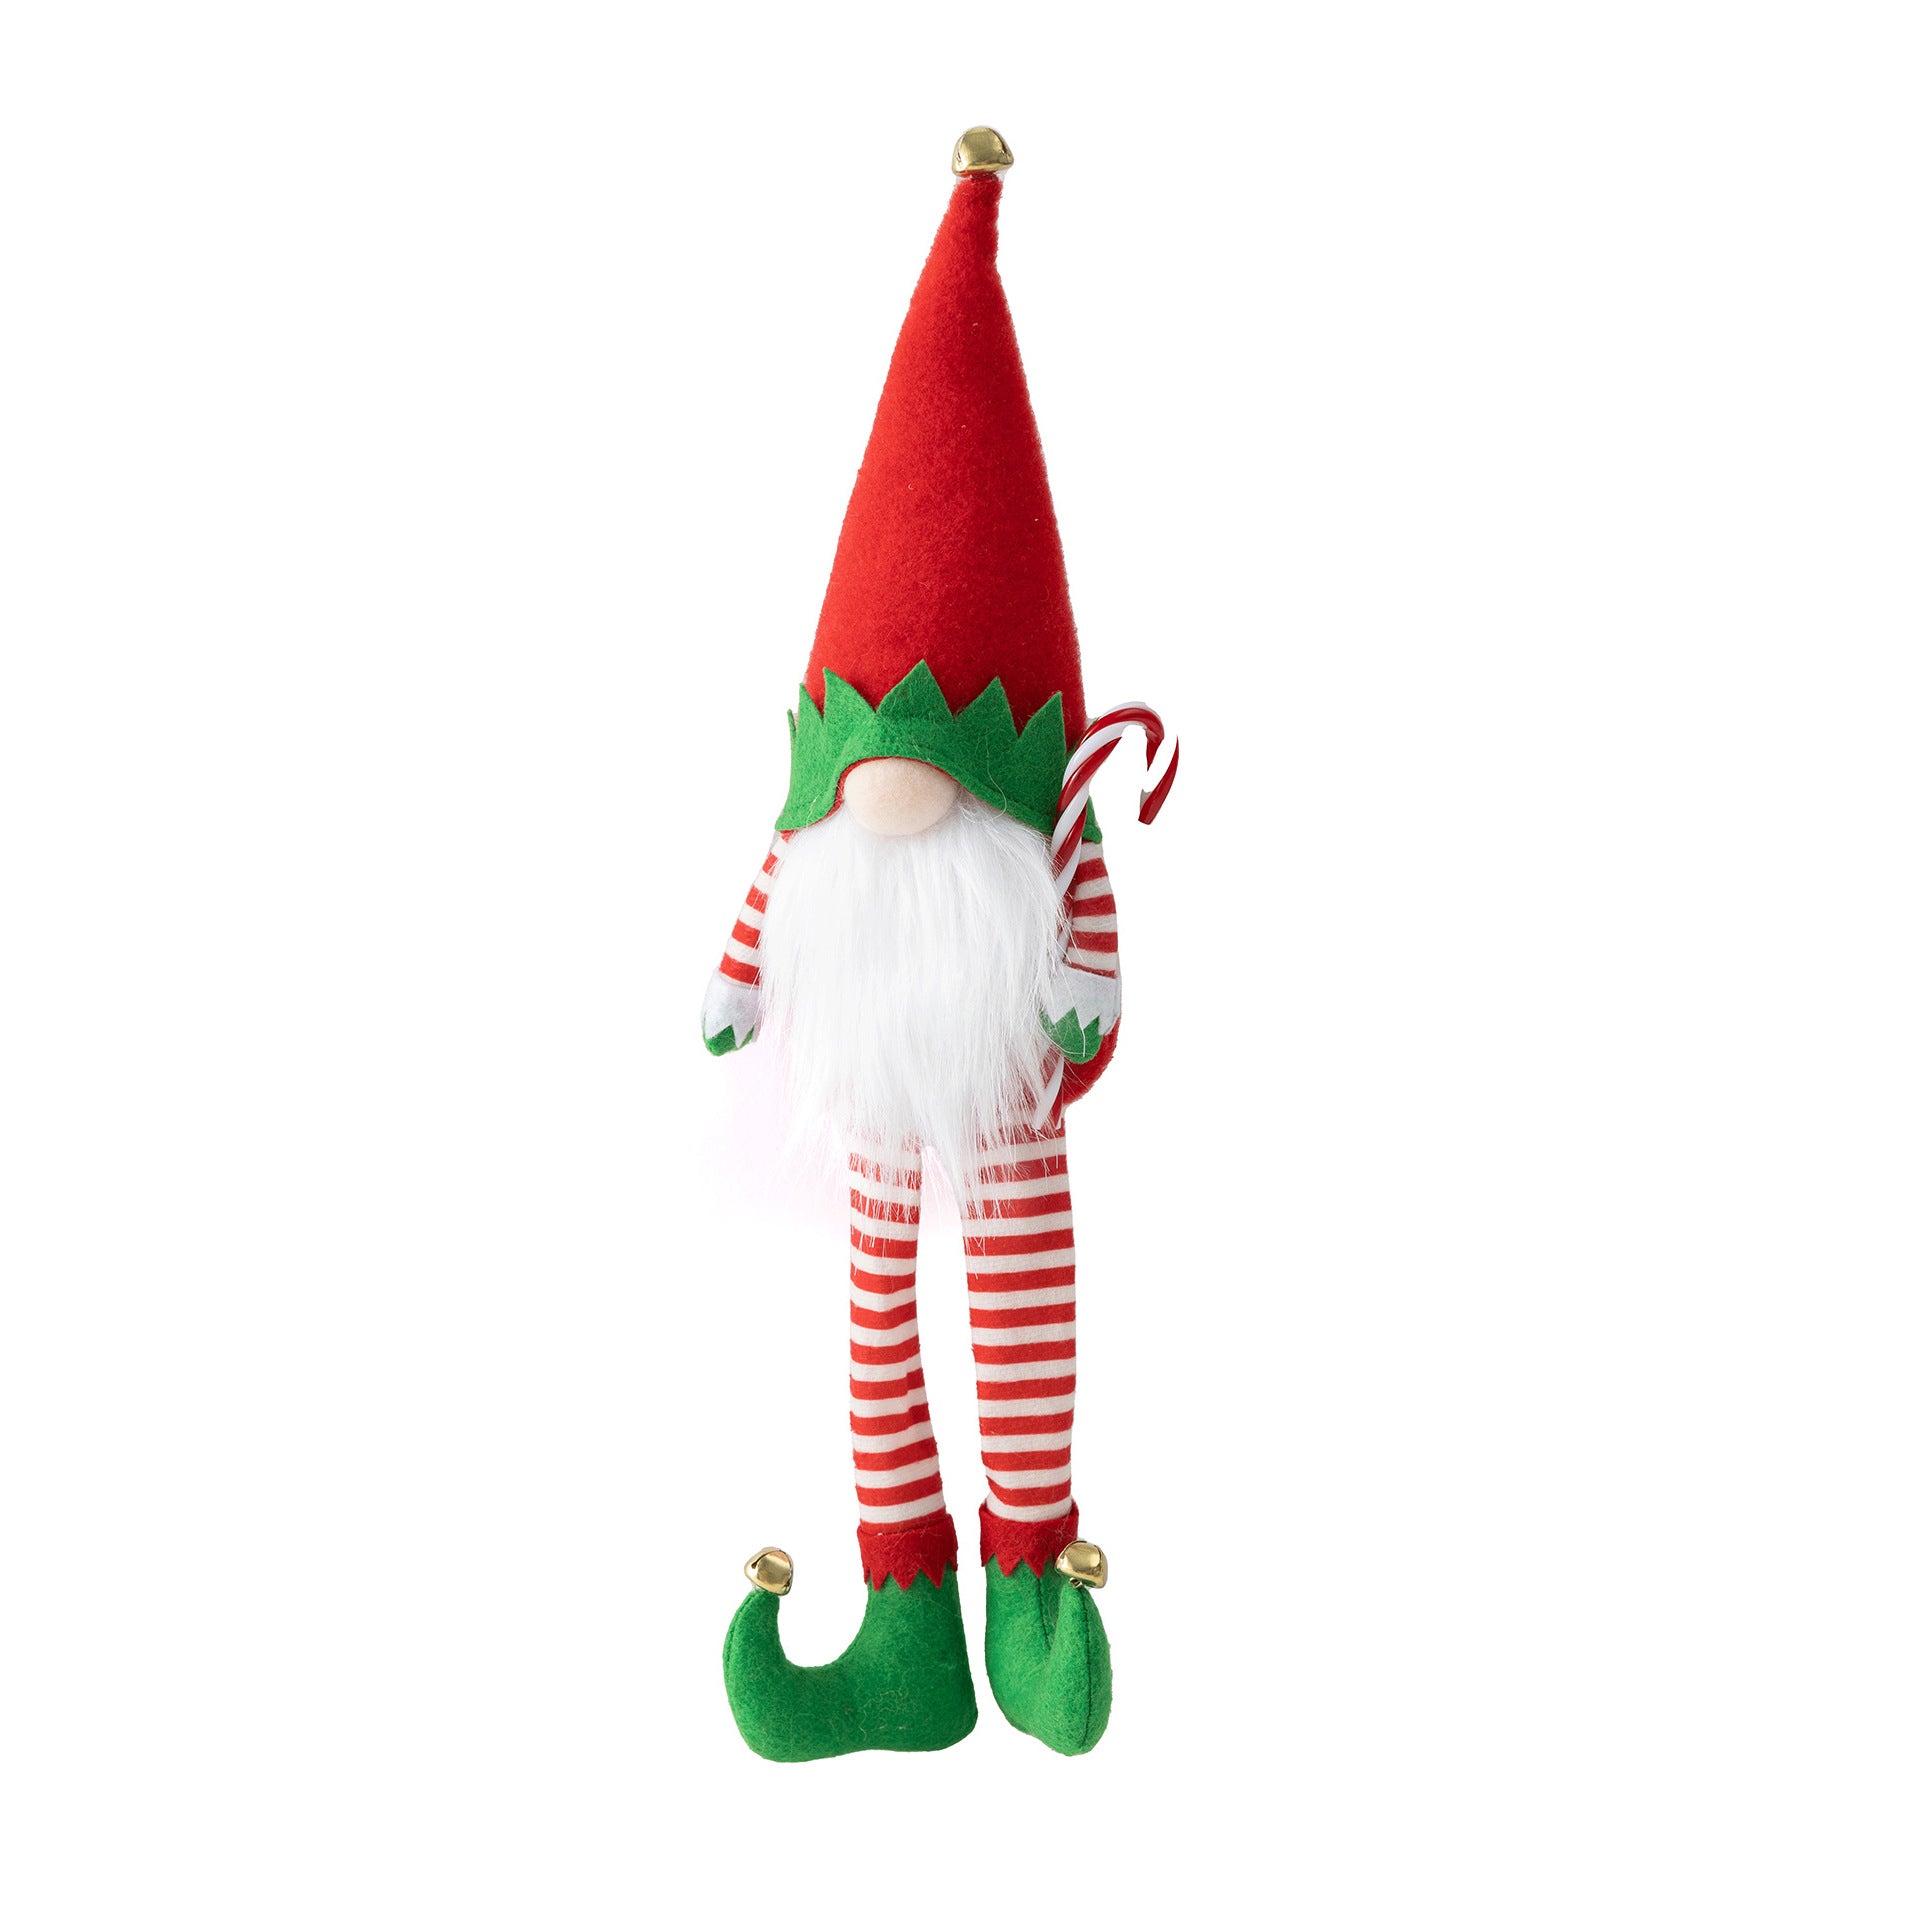 Christmas long-legged gnomes with big boots